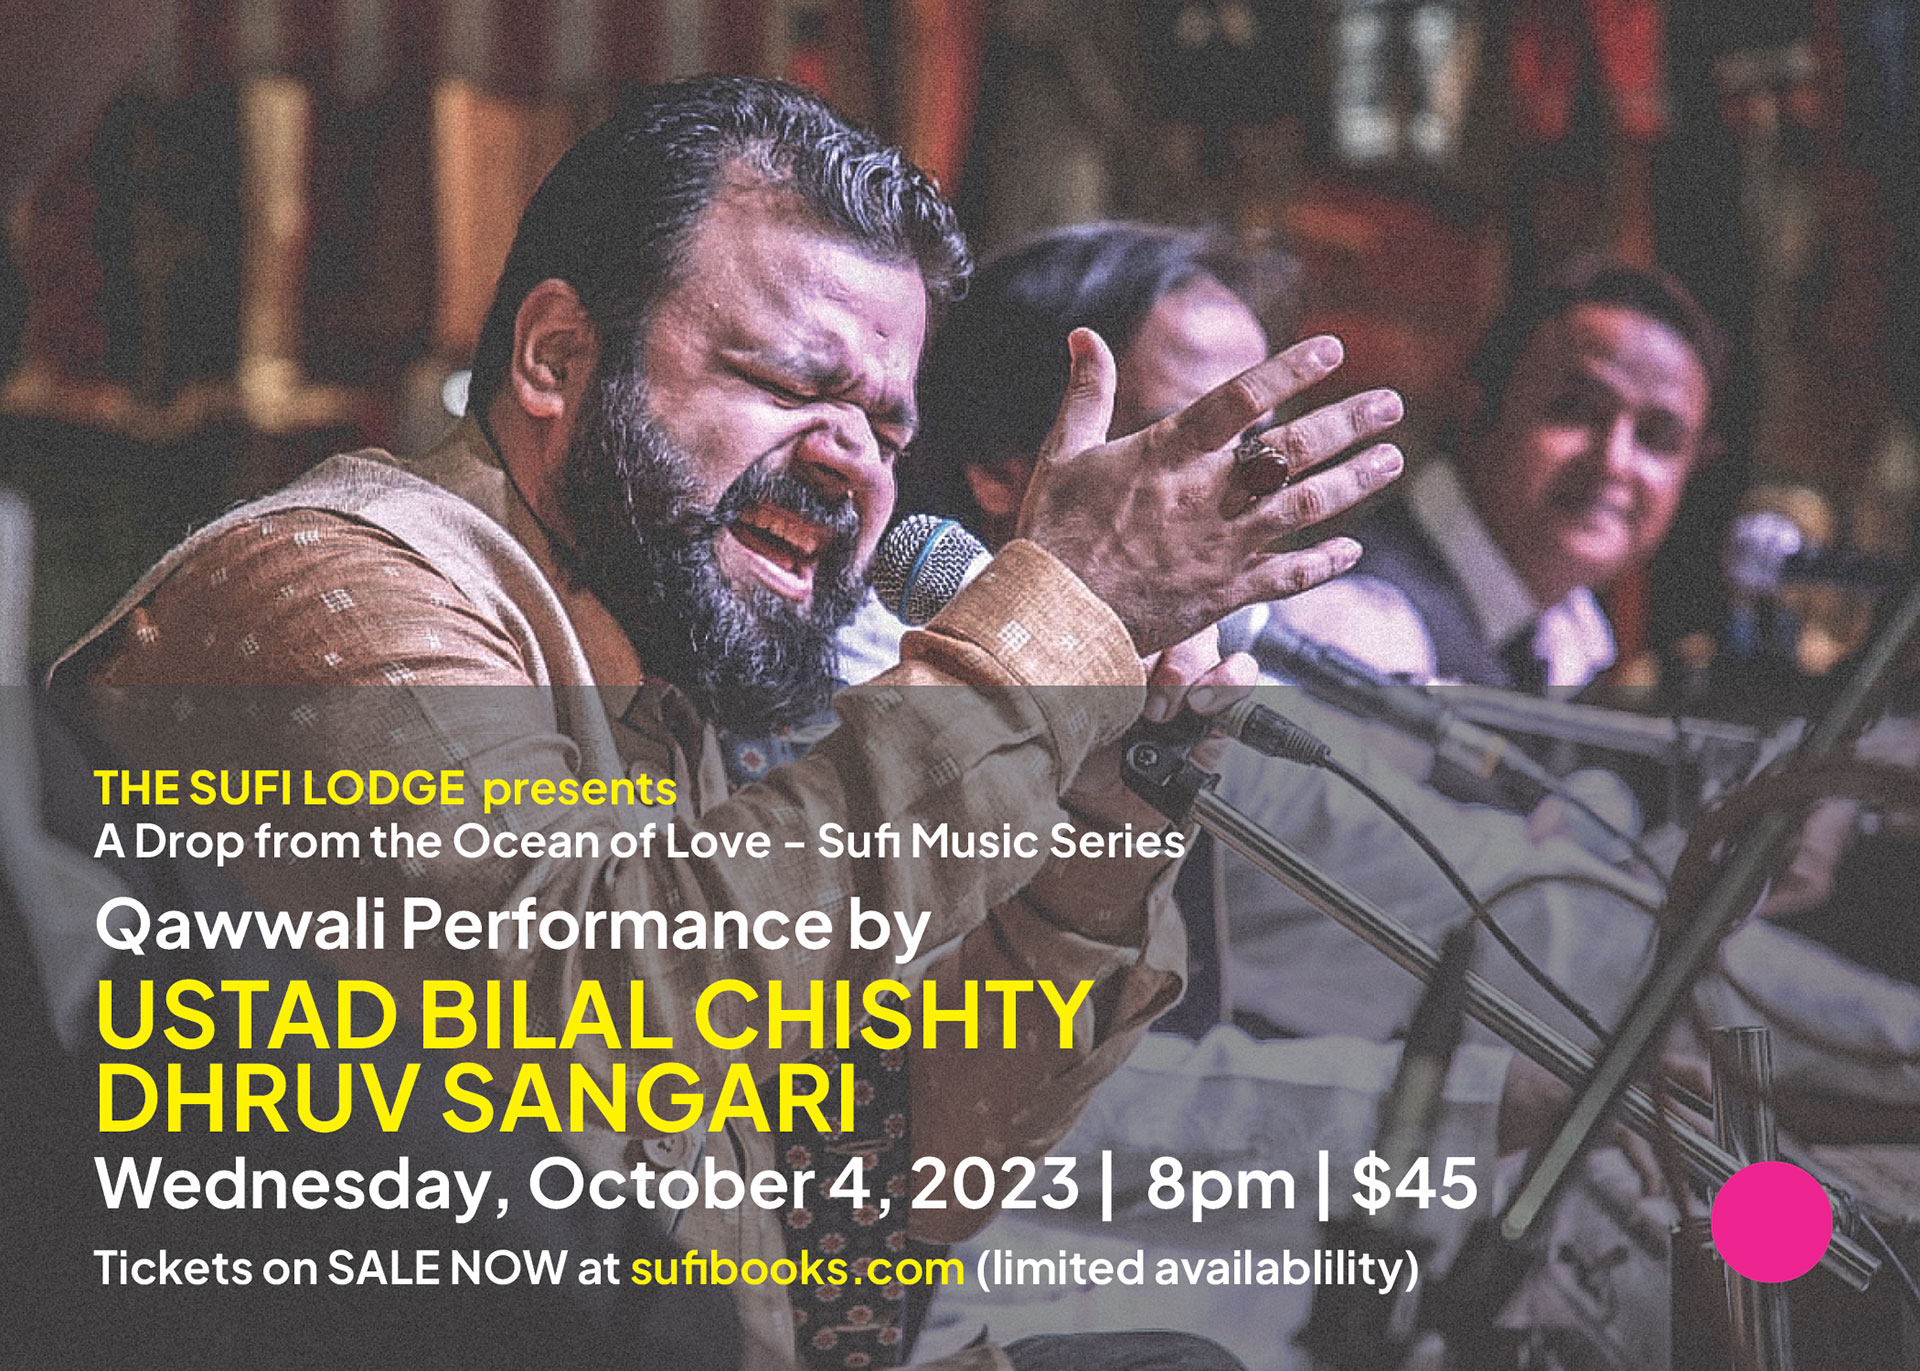 Wednesday, October 4, 2023 | Qawwali Performance by Ustad Bilal Chisty (Dhruv Sangari) | 8 pm | $45